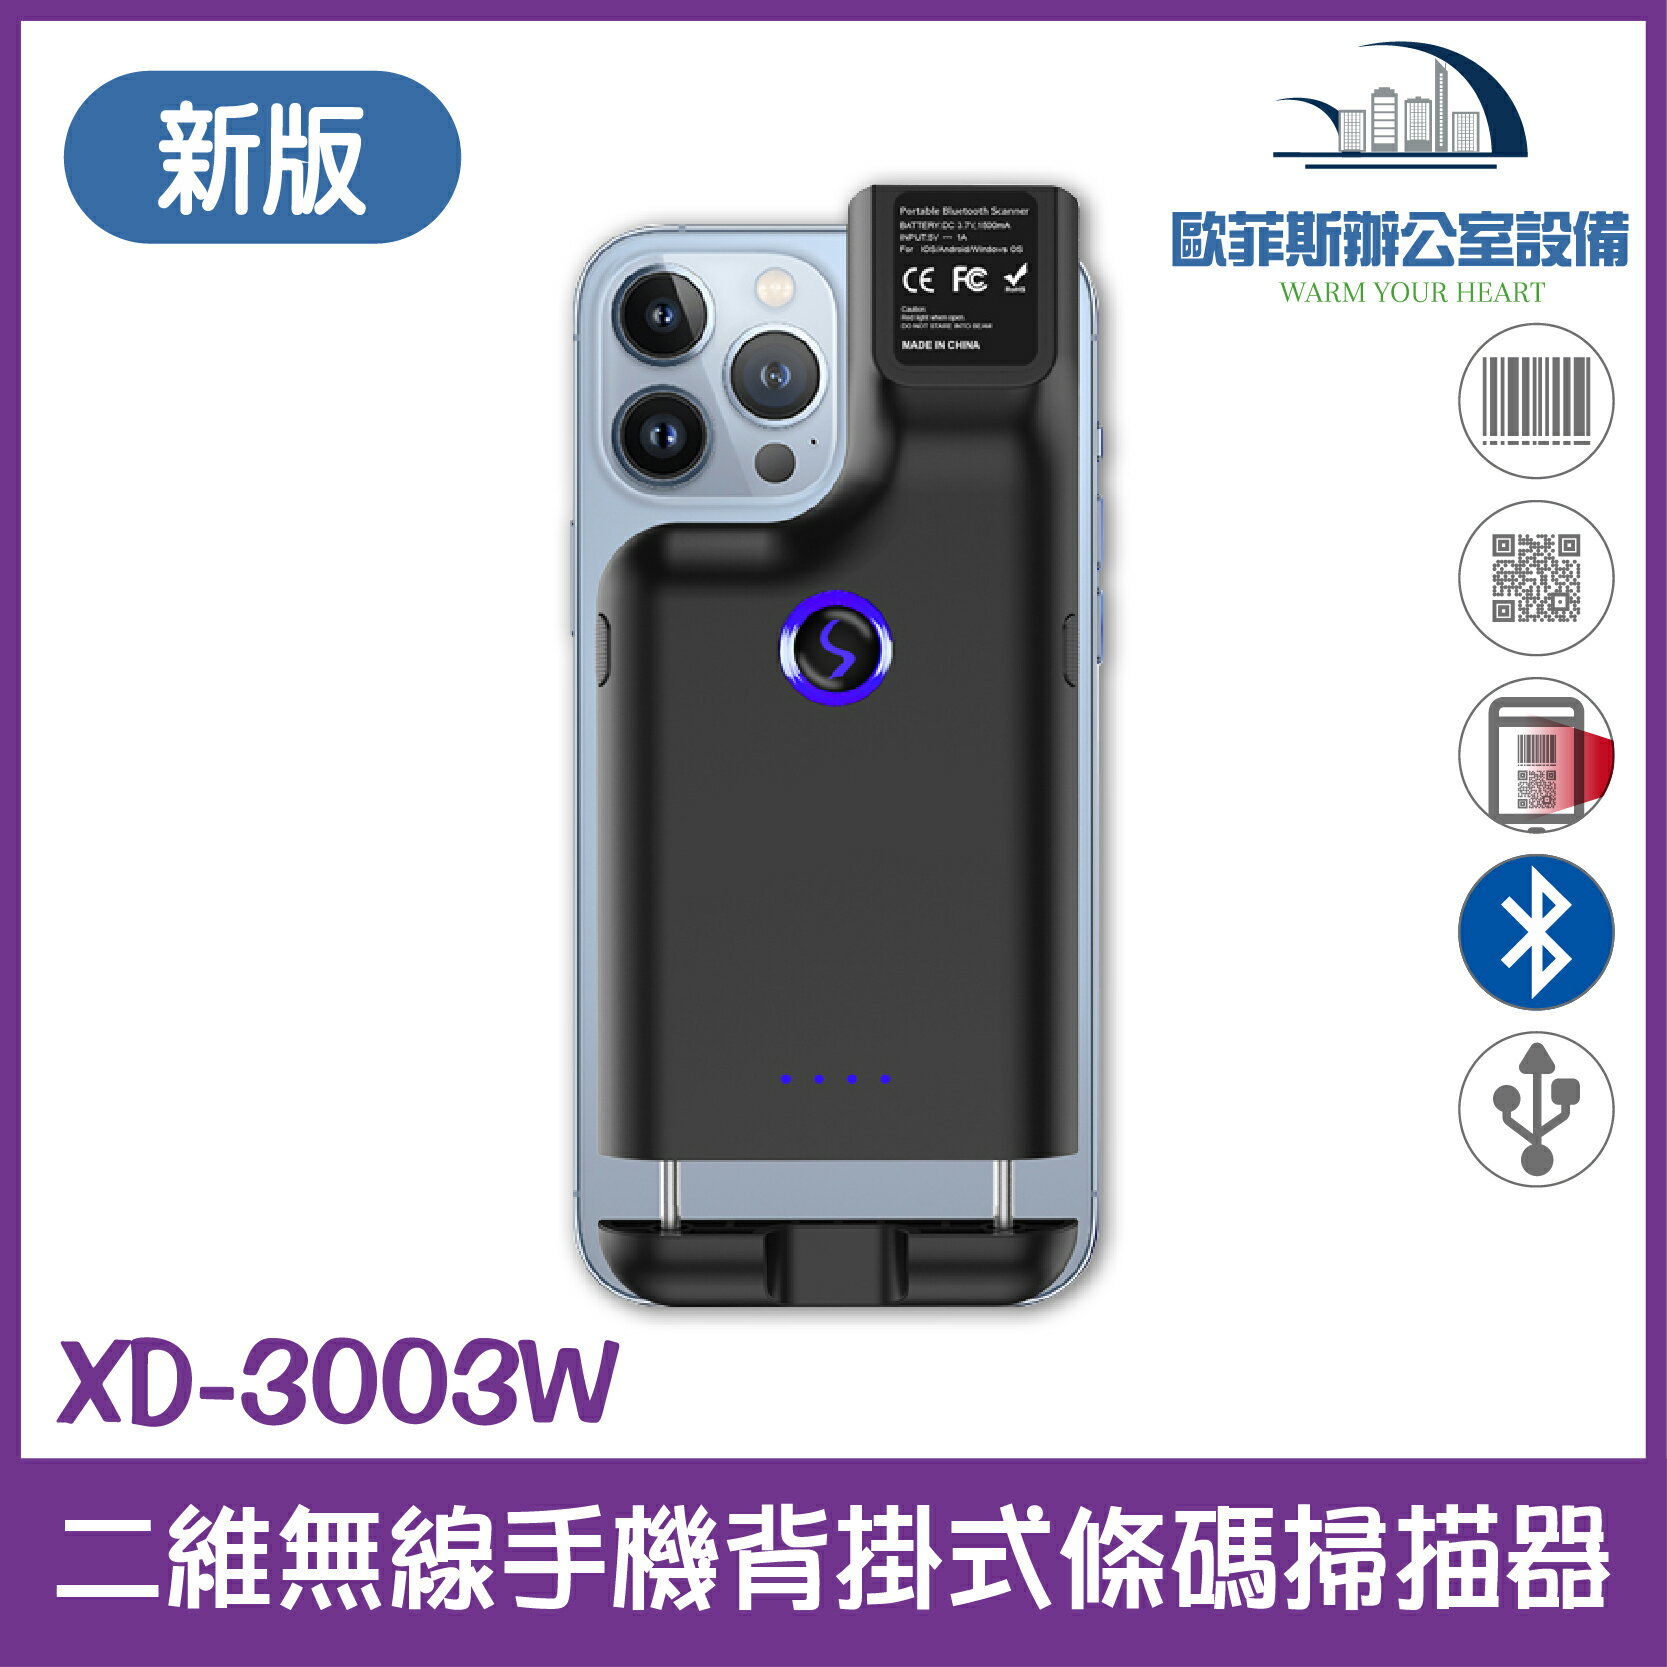 @XD-3003W 二維無線手機背掛式條碼掃描器 手機變PDA省很大 有藍芽功能 能讀一維和二維條碼 支援螢幕掃描